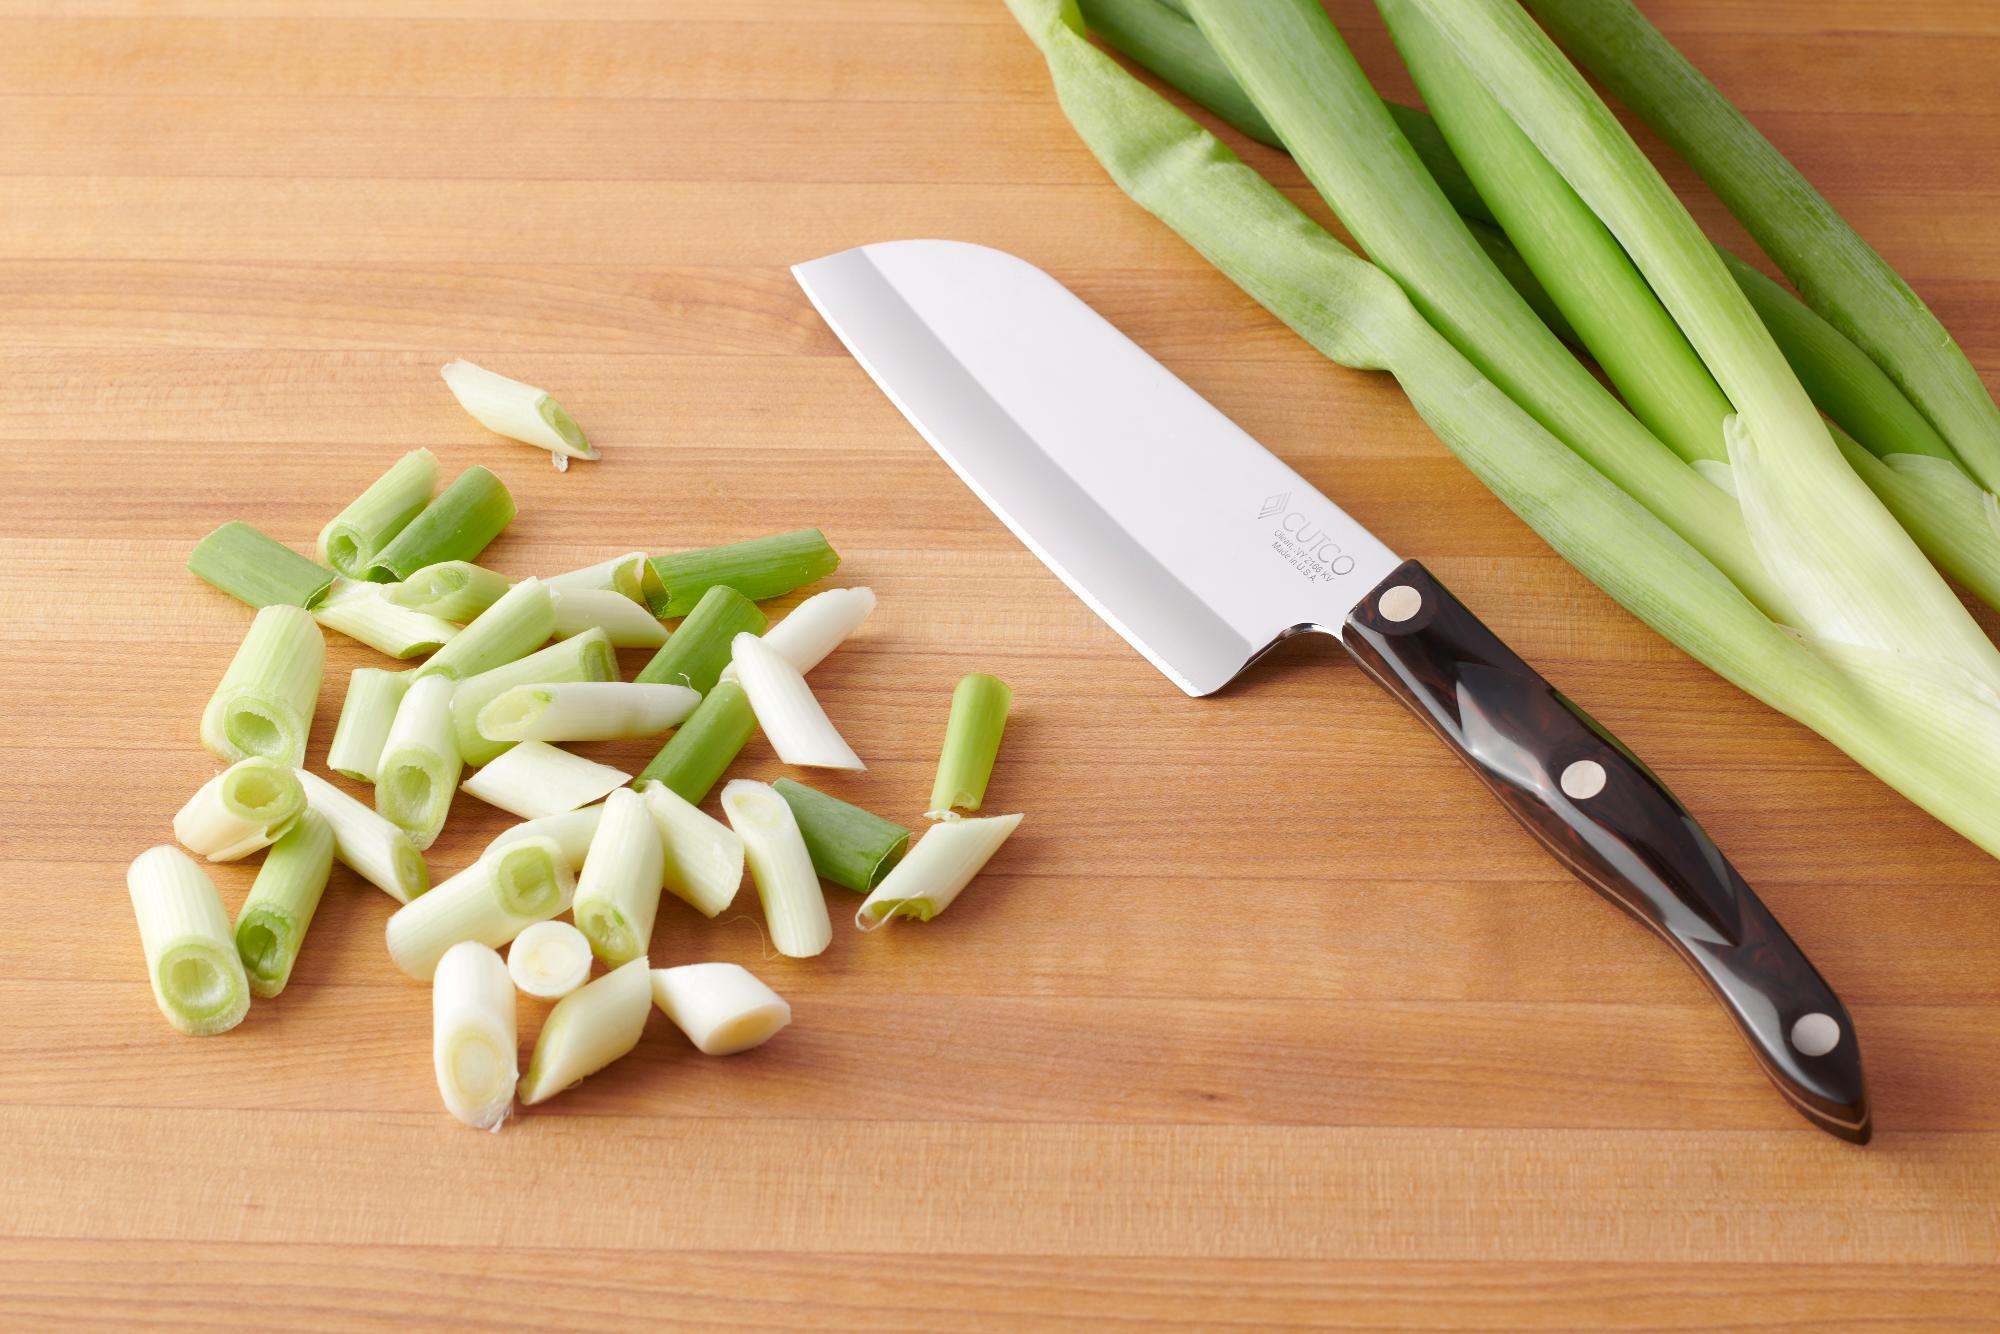 Use the Petite Santoku to slice the green onions.